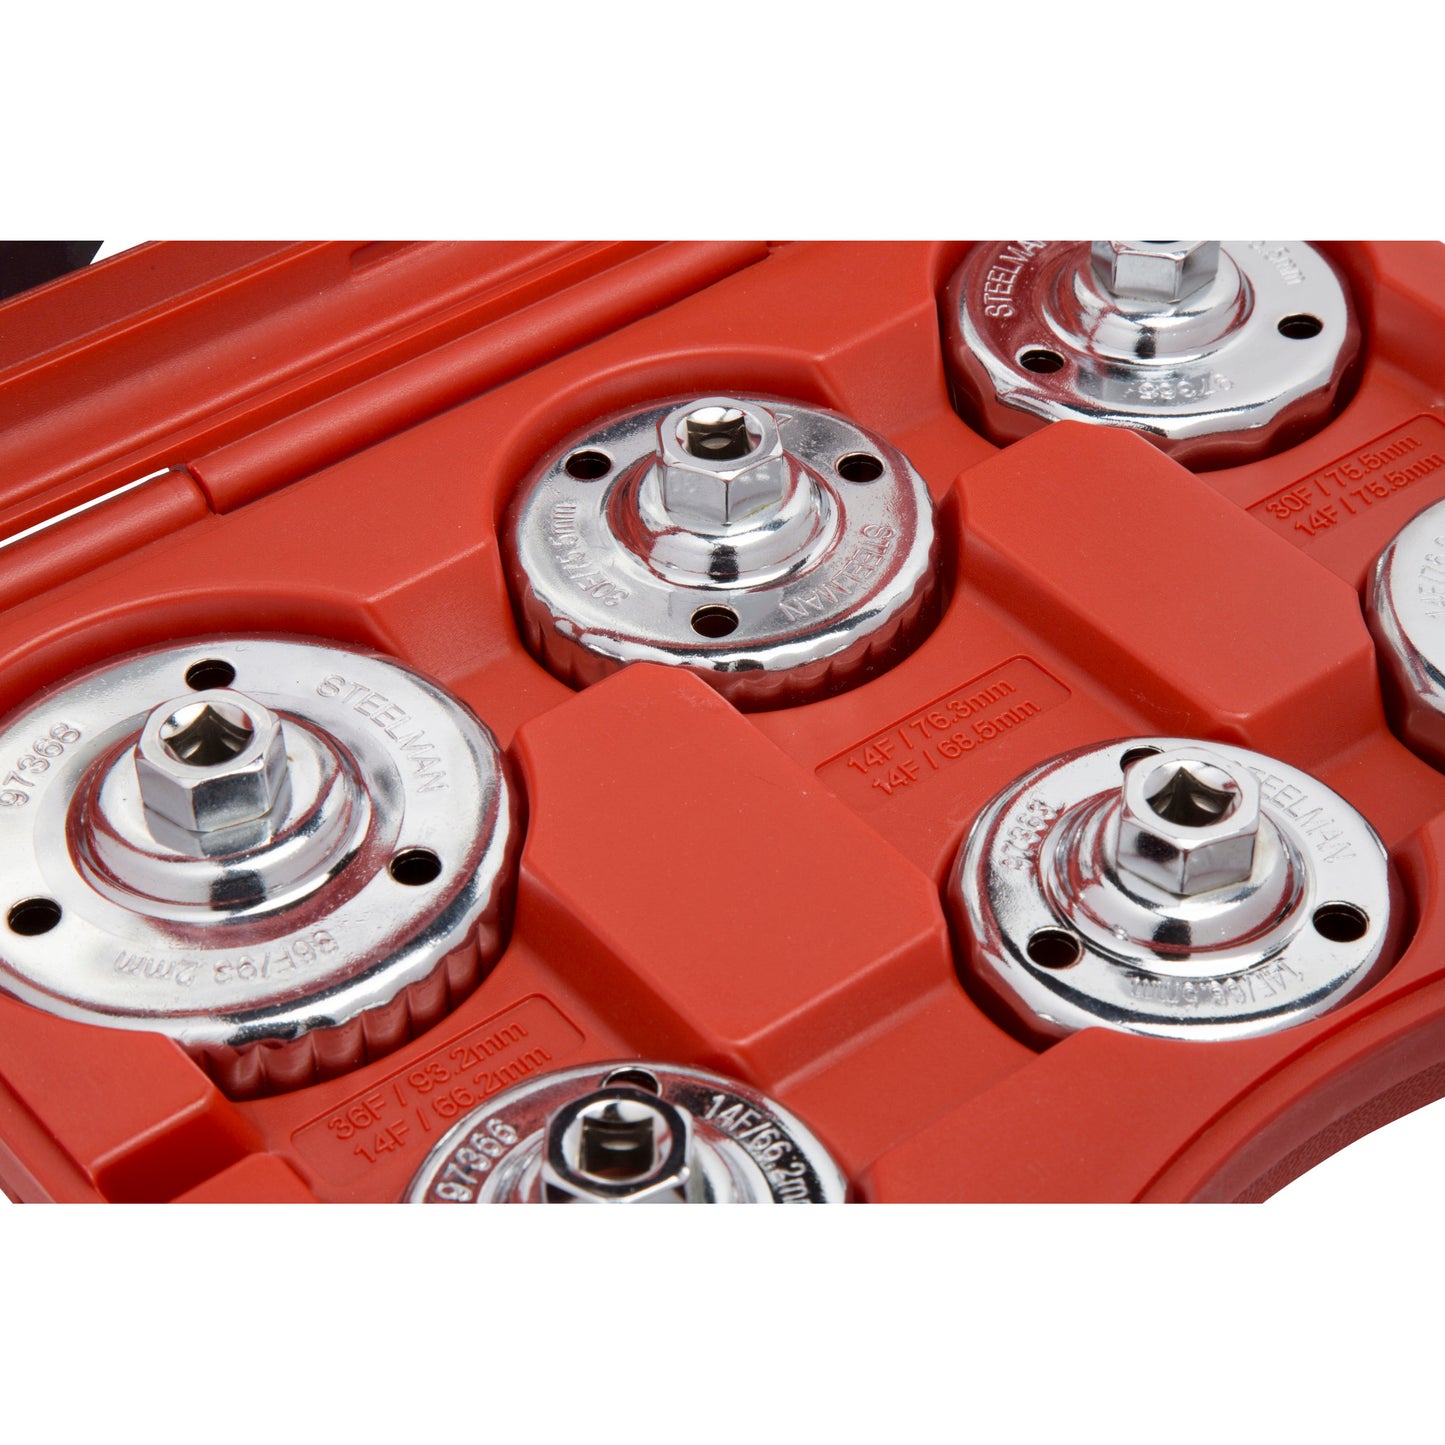 Snug Fit Mazda Oil Filter Cap Wrench 6-piece set